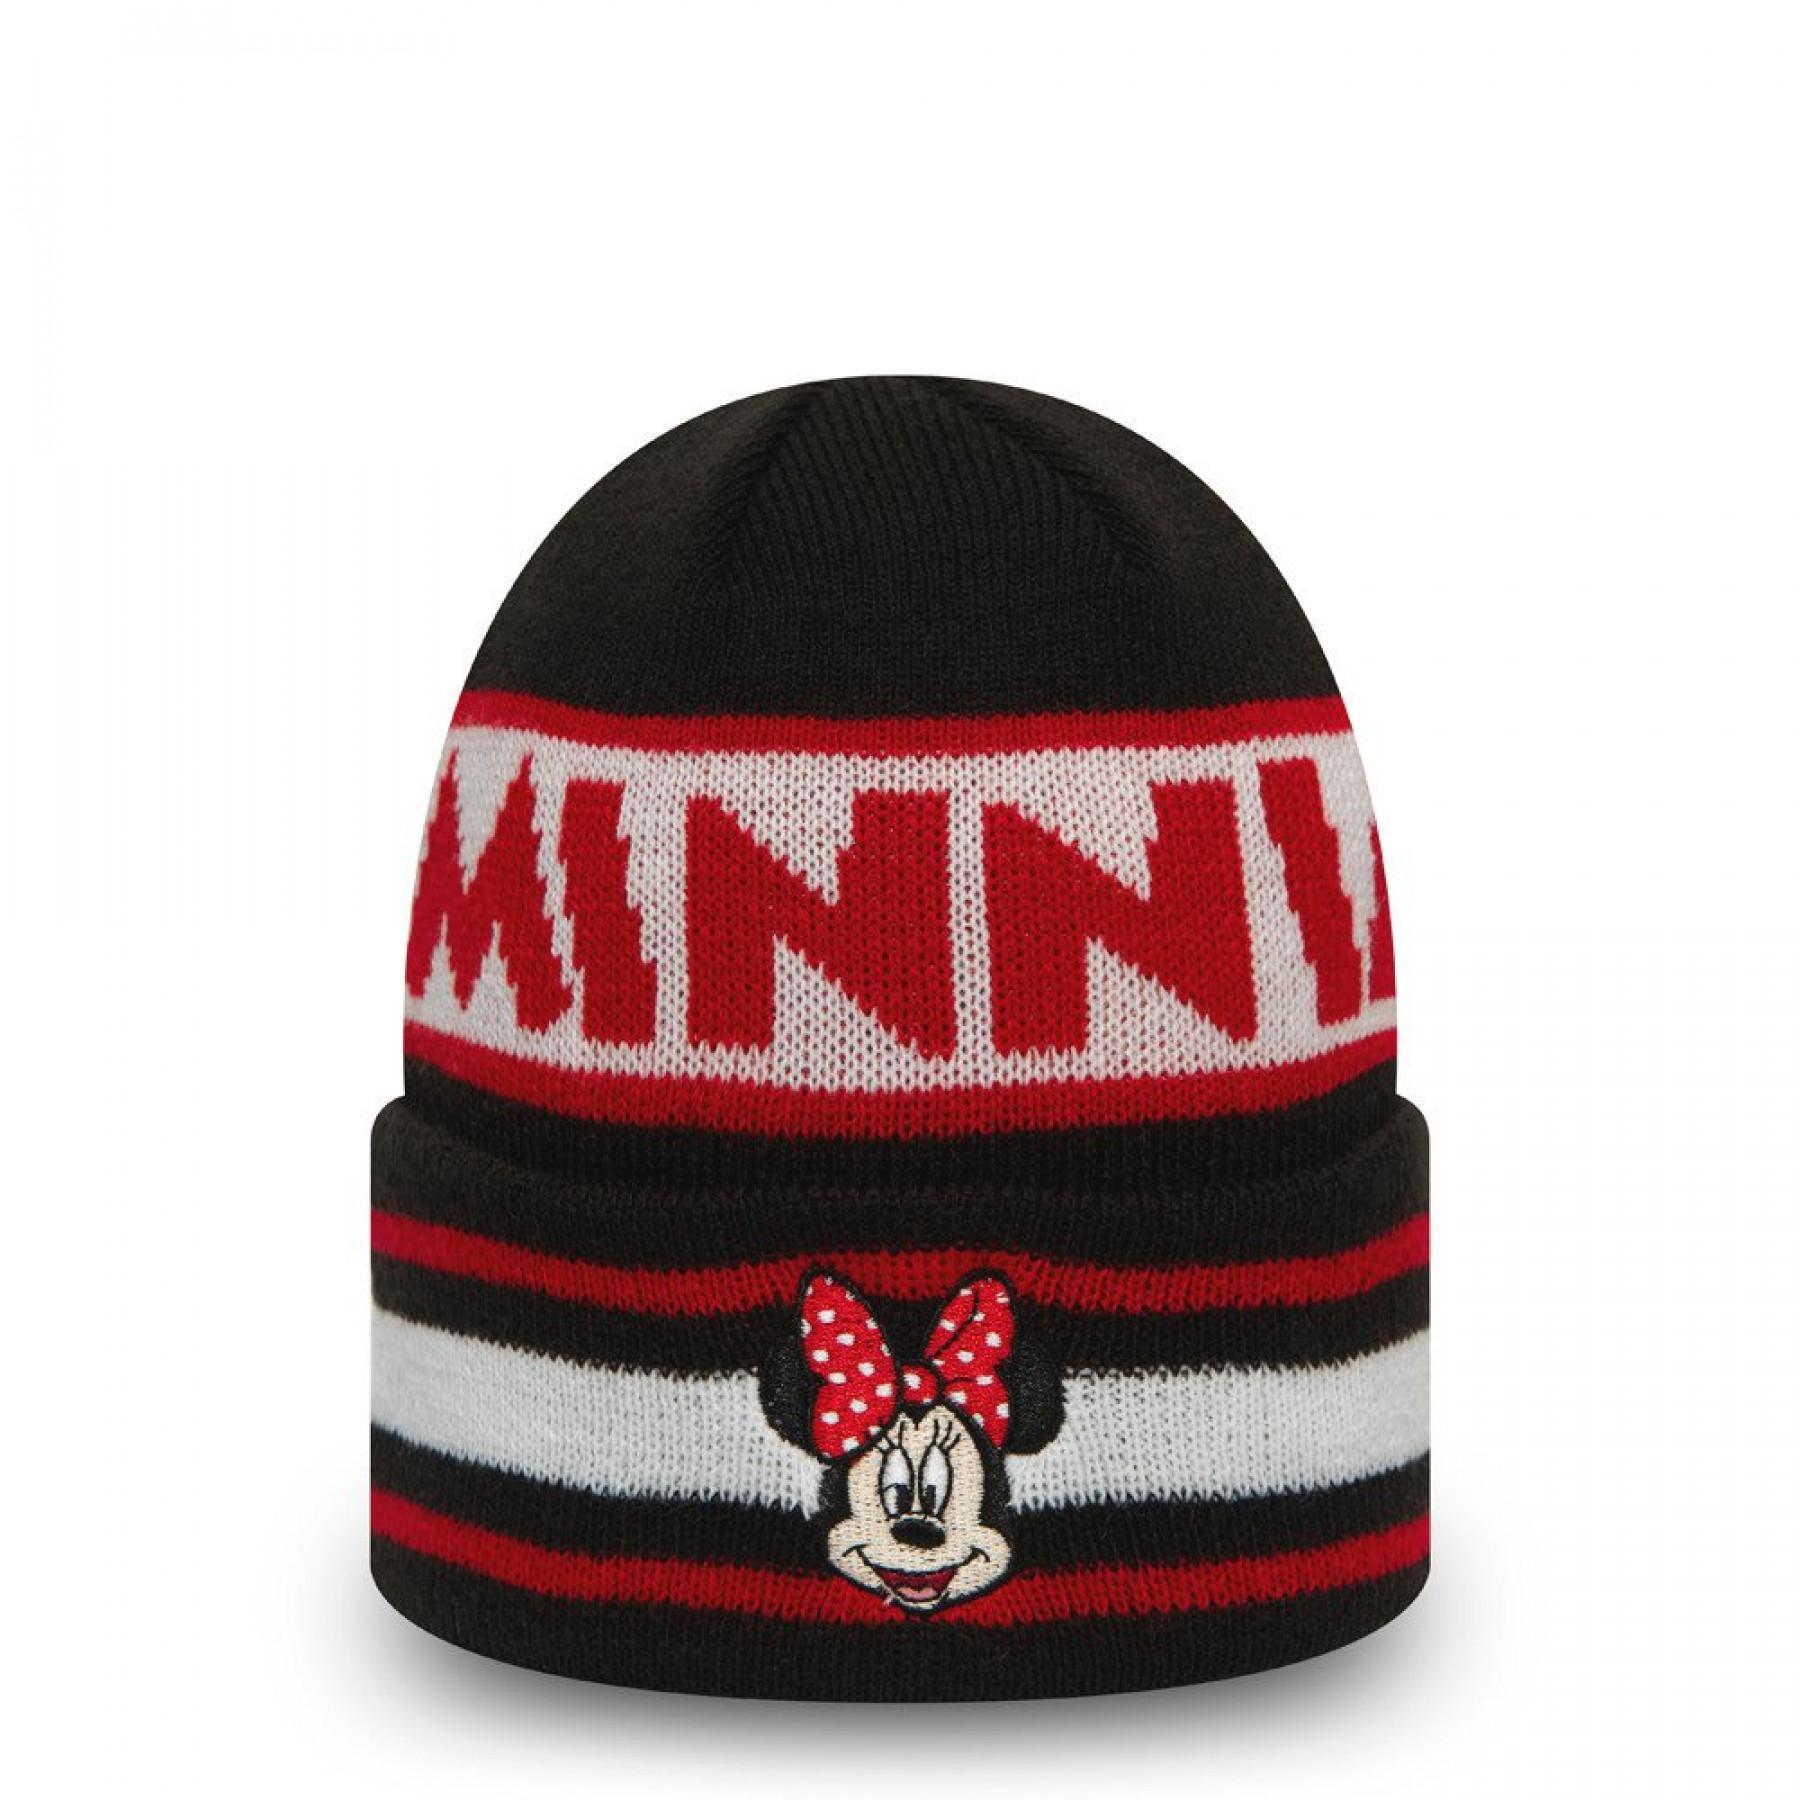 Children's hat New Era Minnie Mouse Disney Character Knit